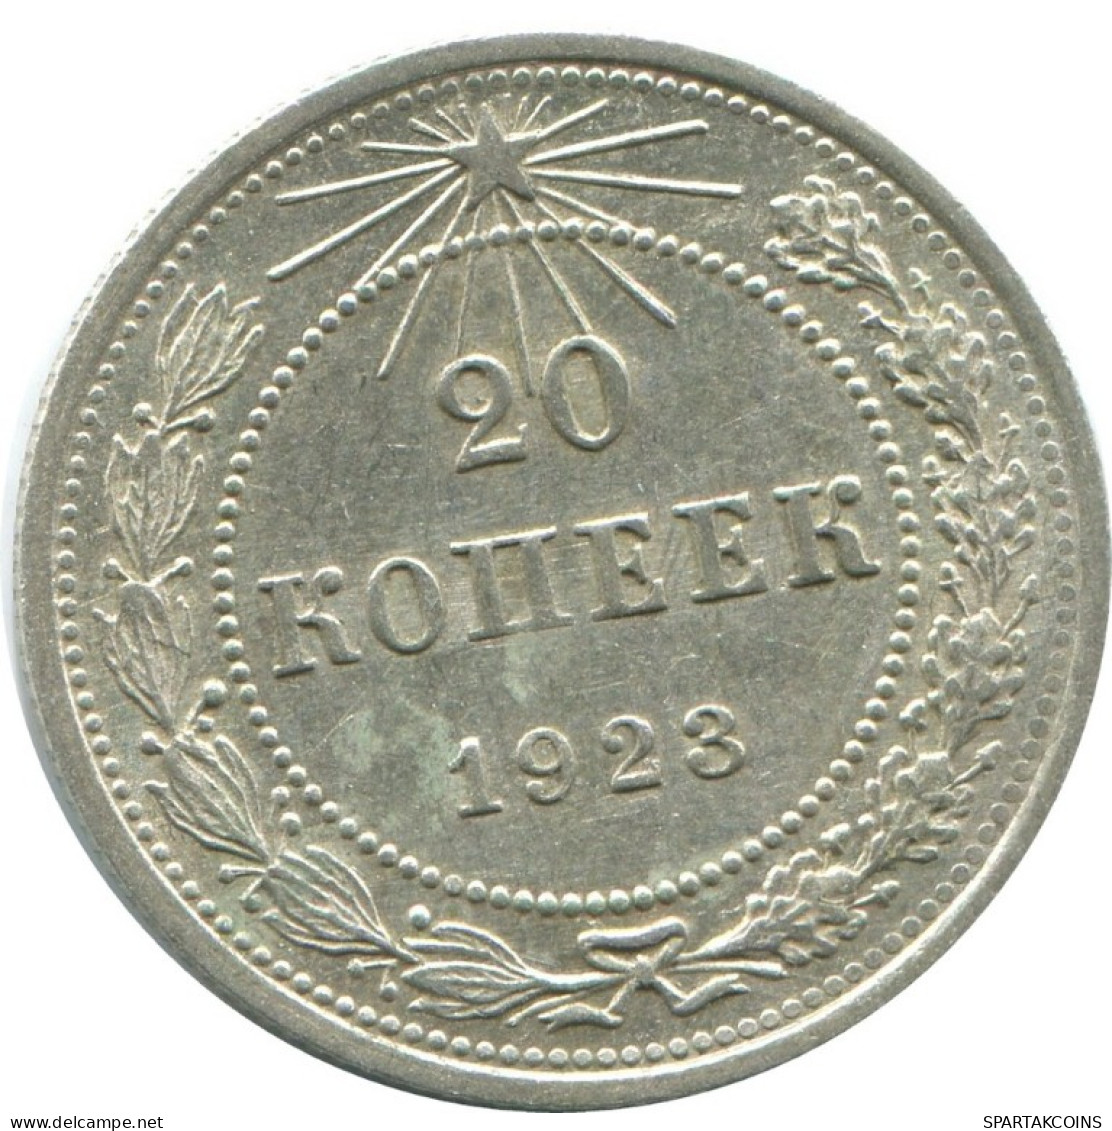 20 KOPEKS 1923 RUSSIA RSFSR SILVER Coin HIGH GRADE #AF635.U.A - Russie